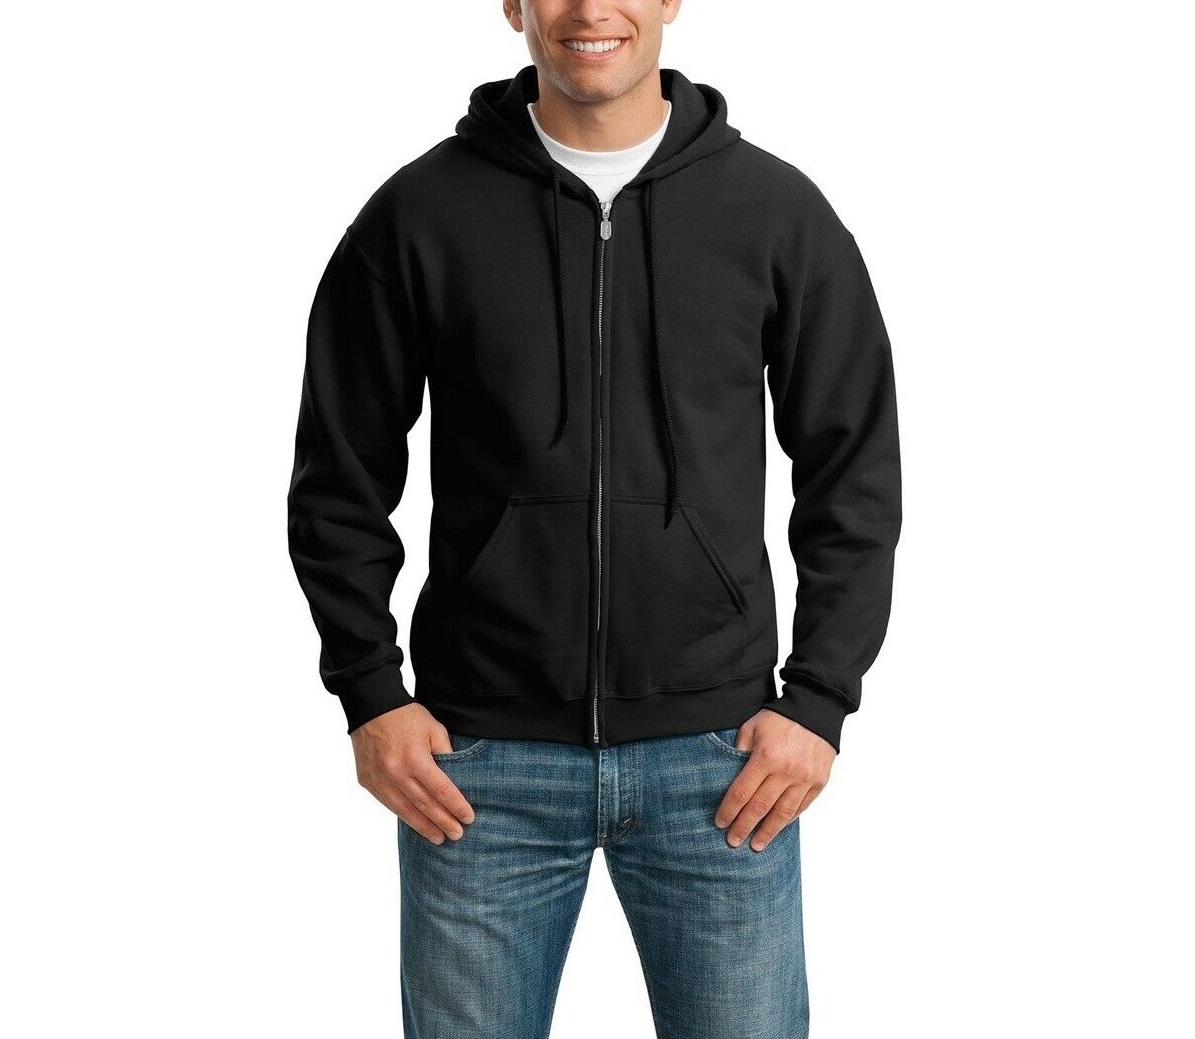 Thick Hooded Fleece Jacket for men with Pockets Sizes: Small, Medium, Large,XL,2XL,3XL,4XL,5XL